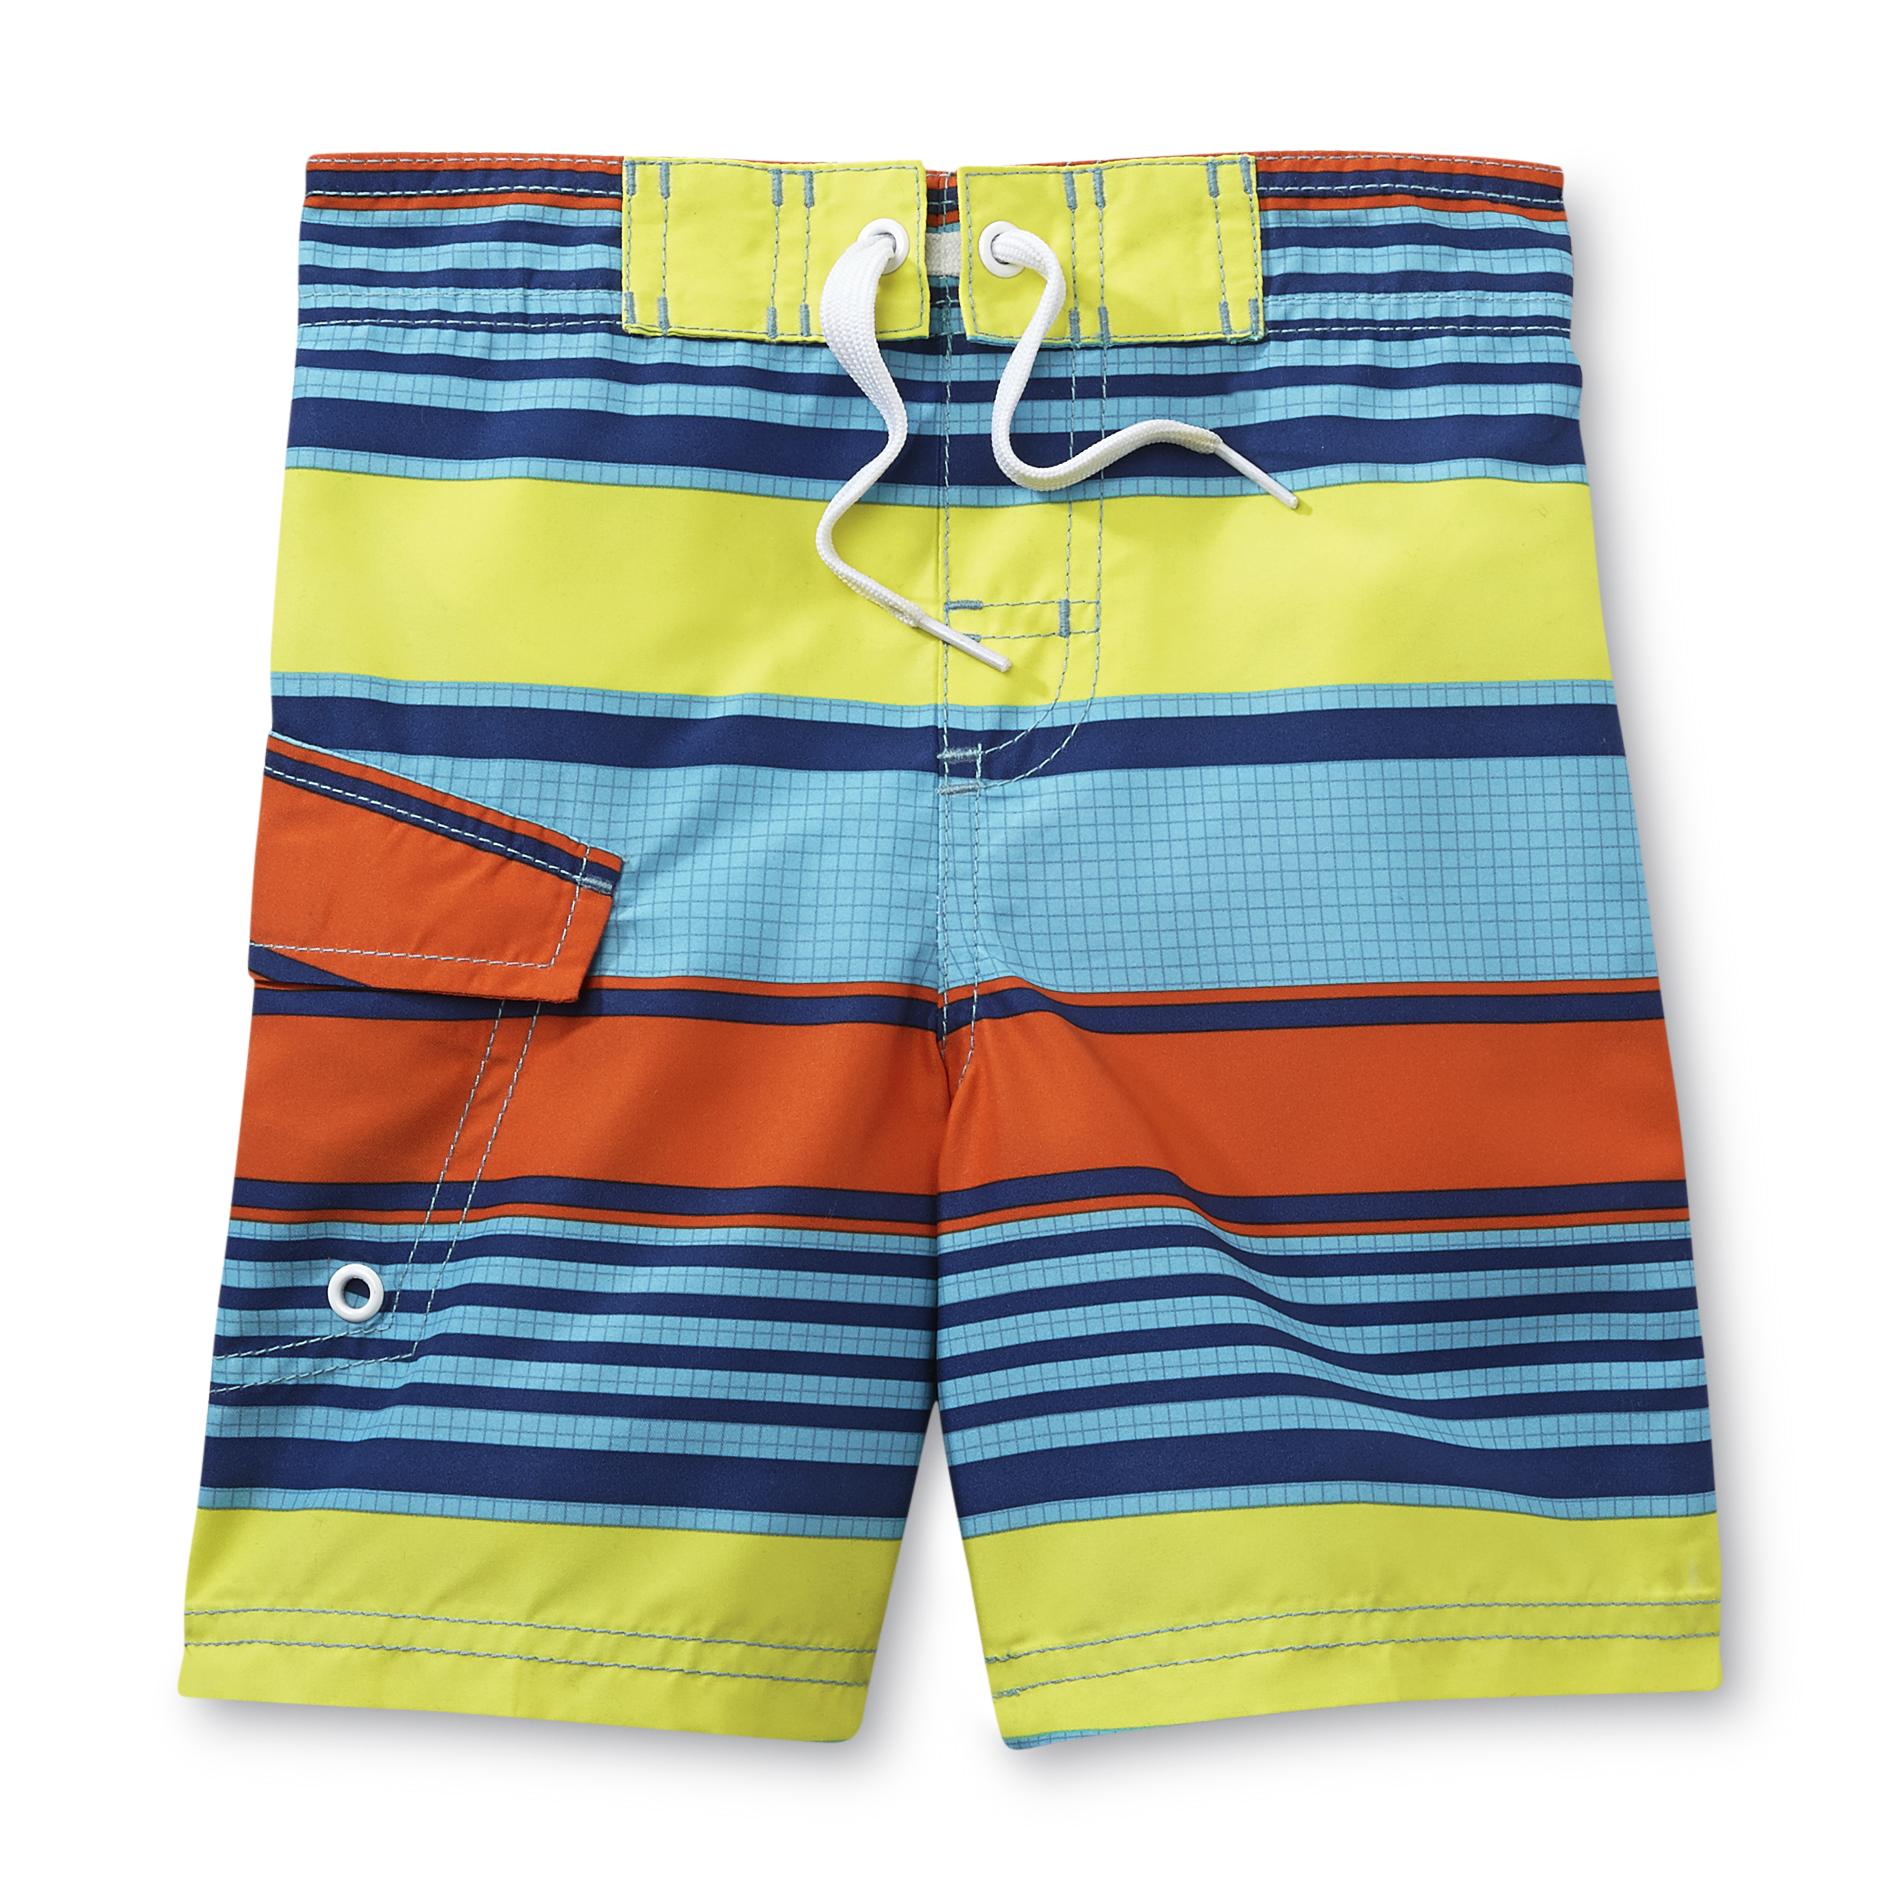 Joe Boxer Infant & Toddler Boy's Swim Trunks - Striped